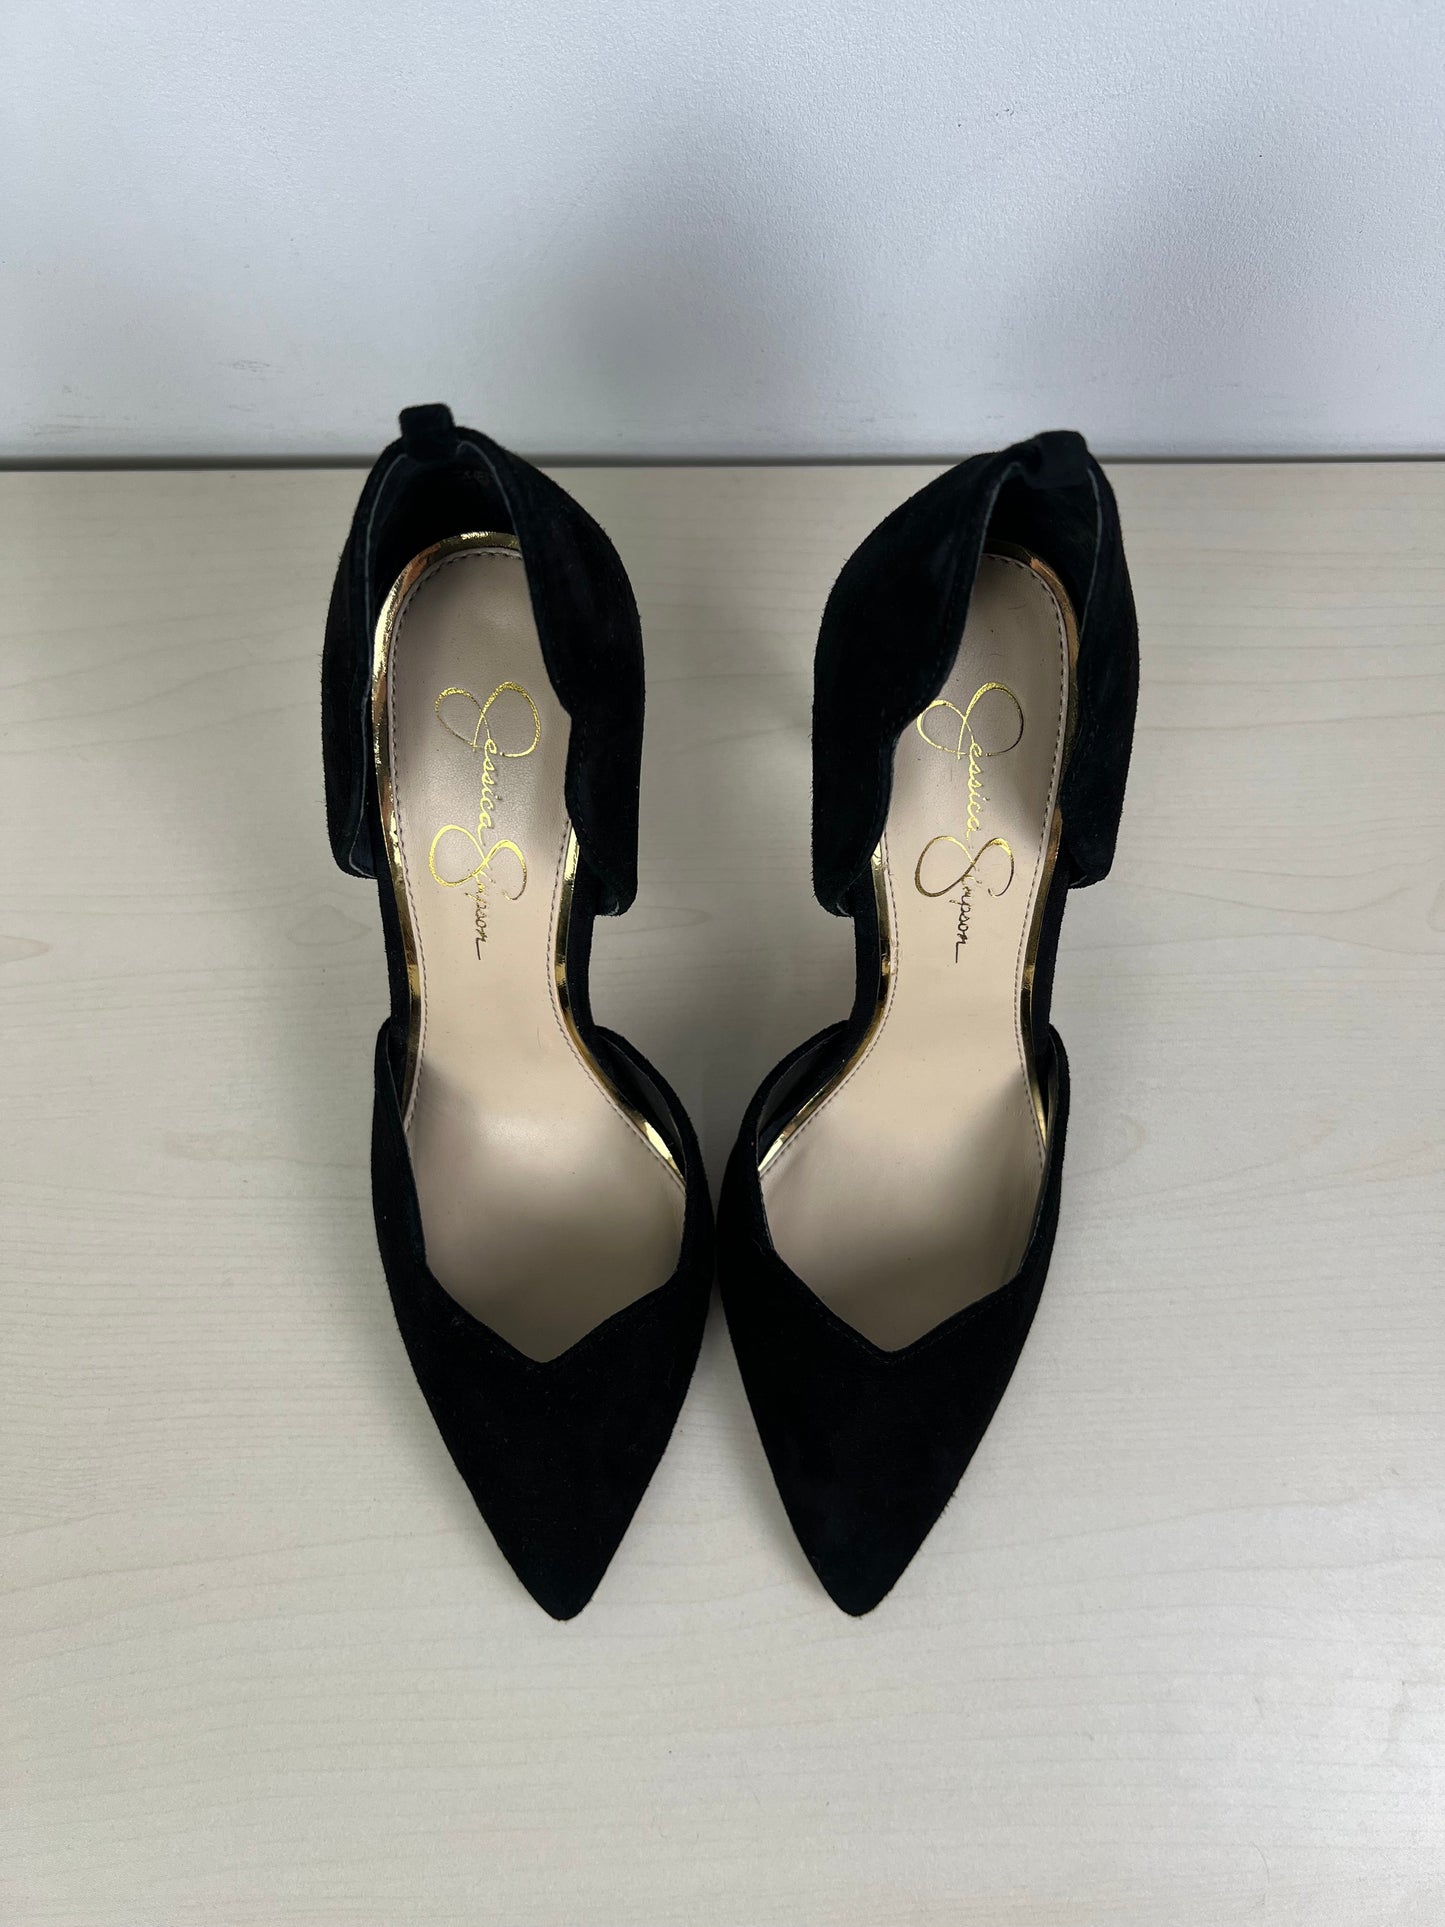 Black Shoes Heels Stiletto Jessica Simpson, Size 8.5